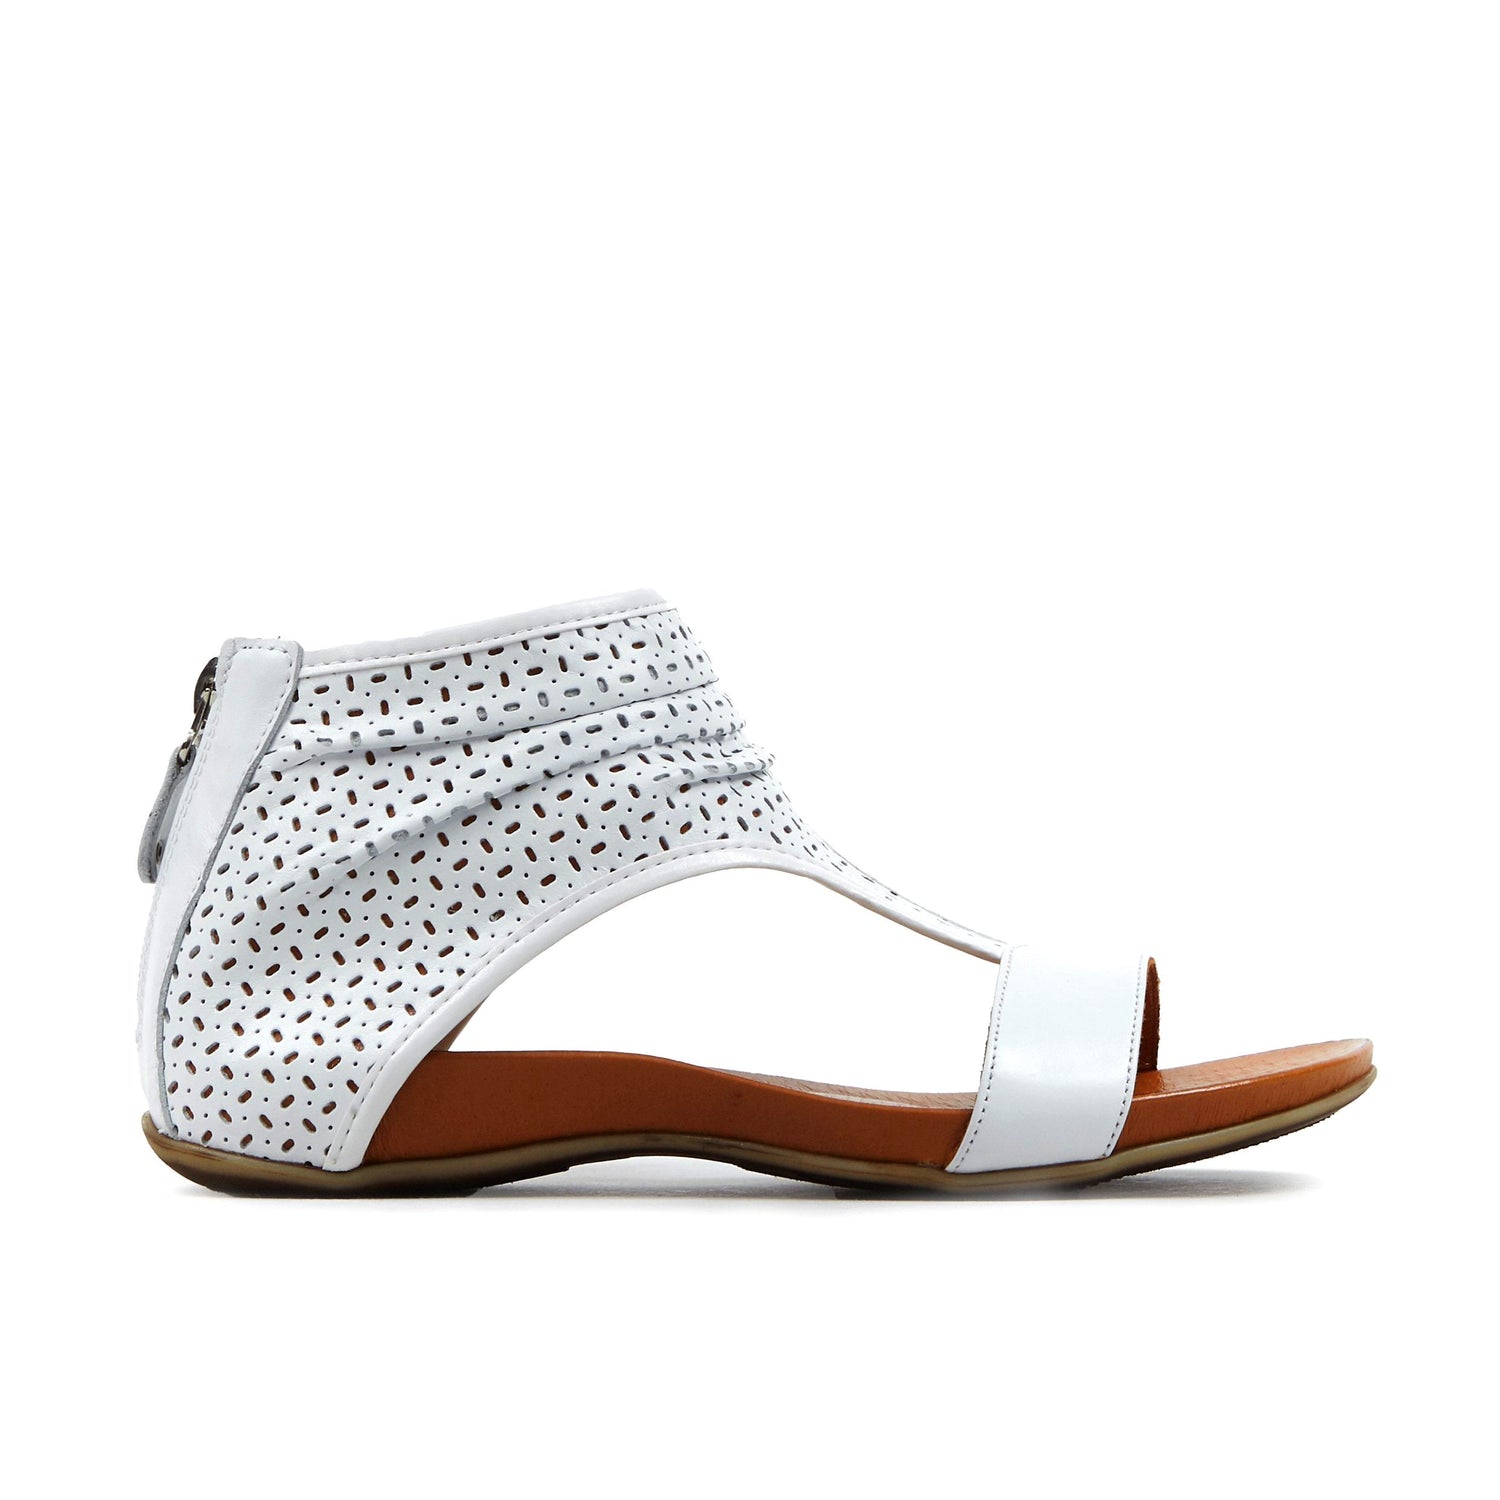 Shop Women's Designer Sandals